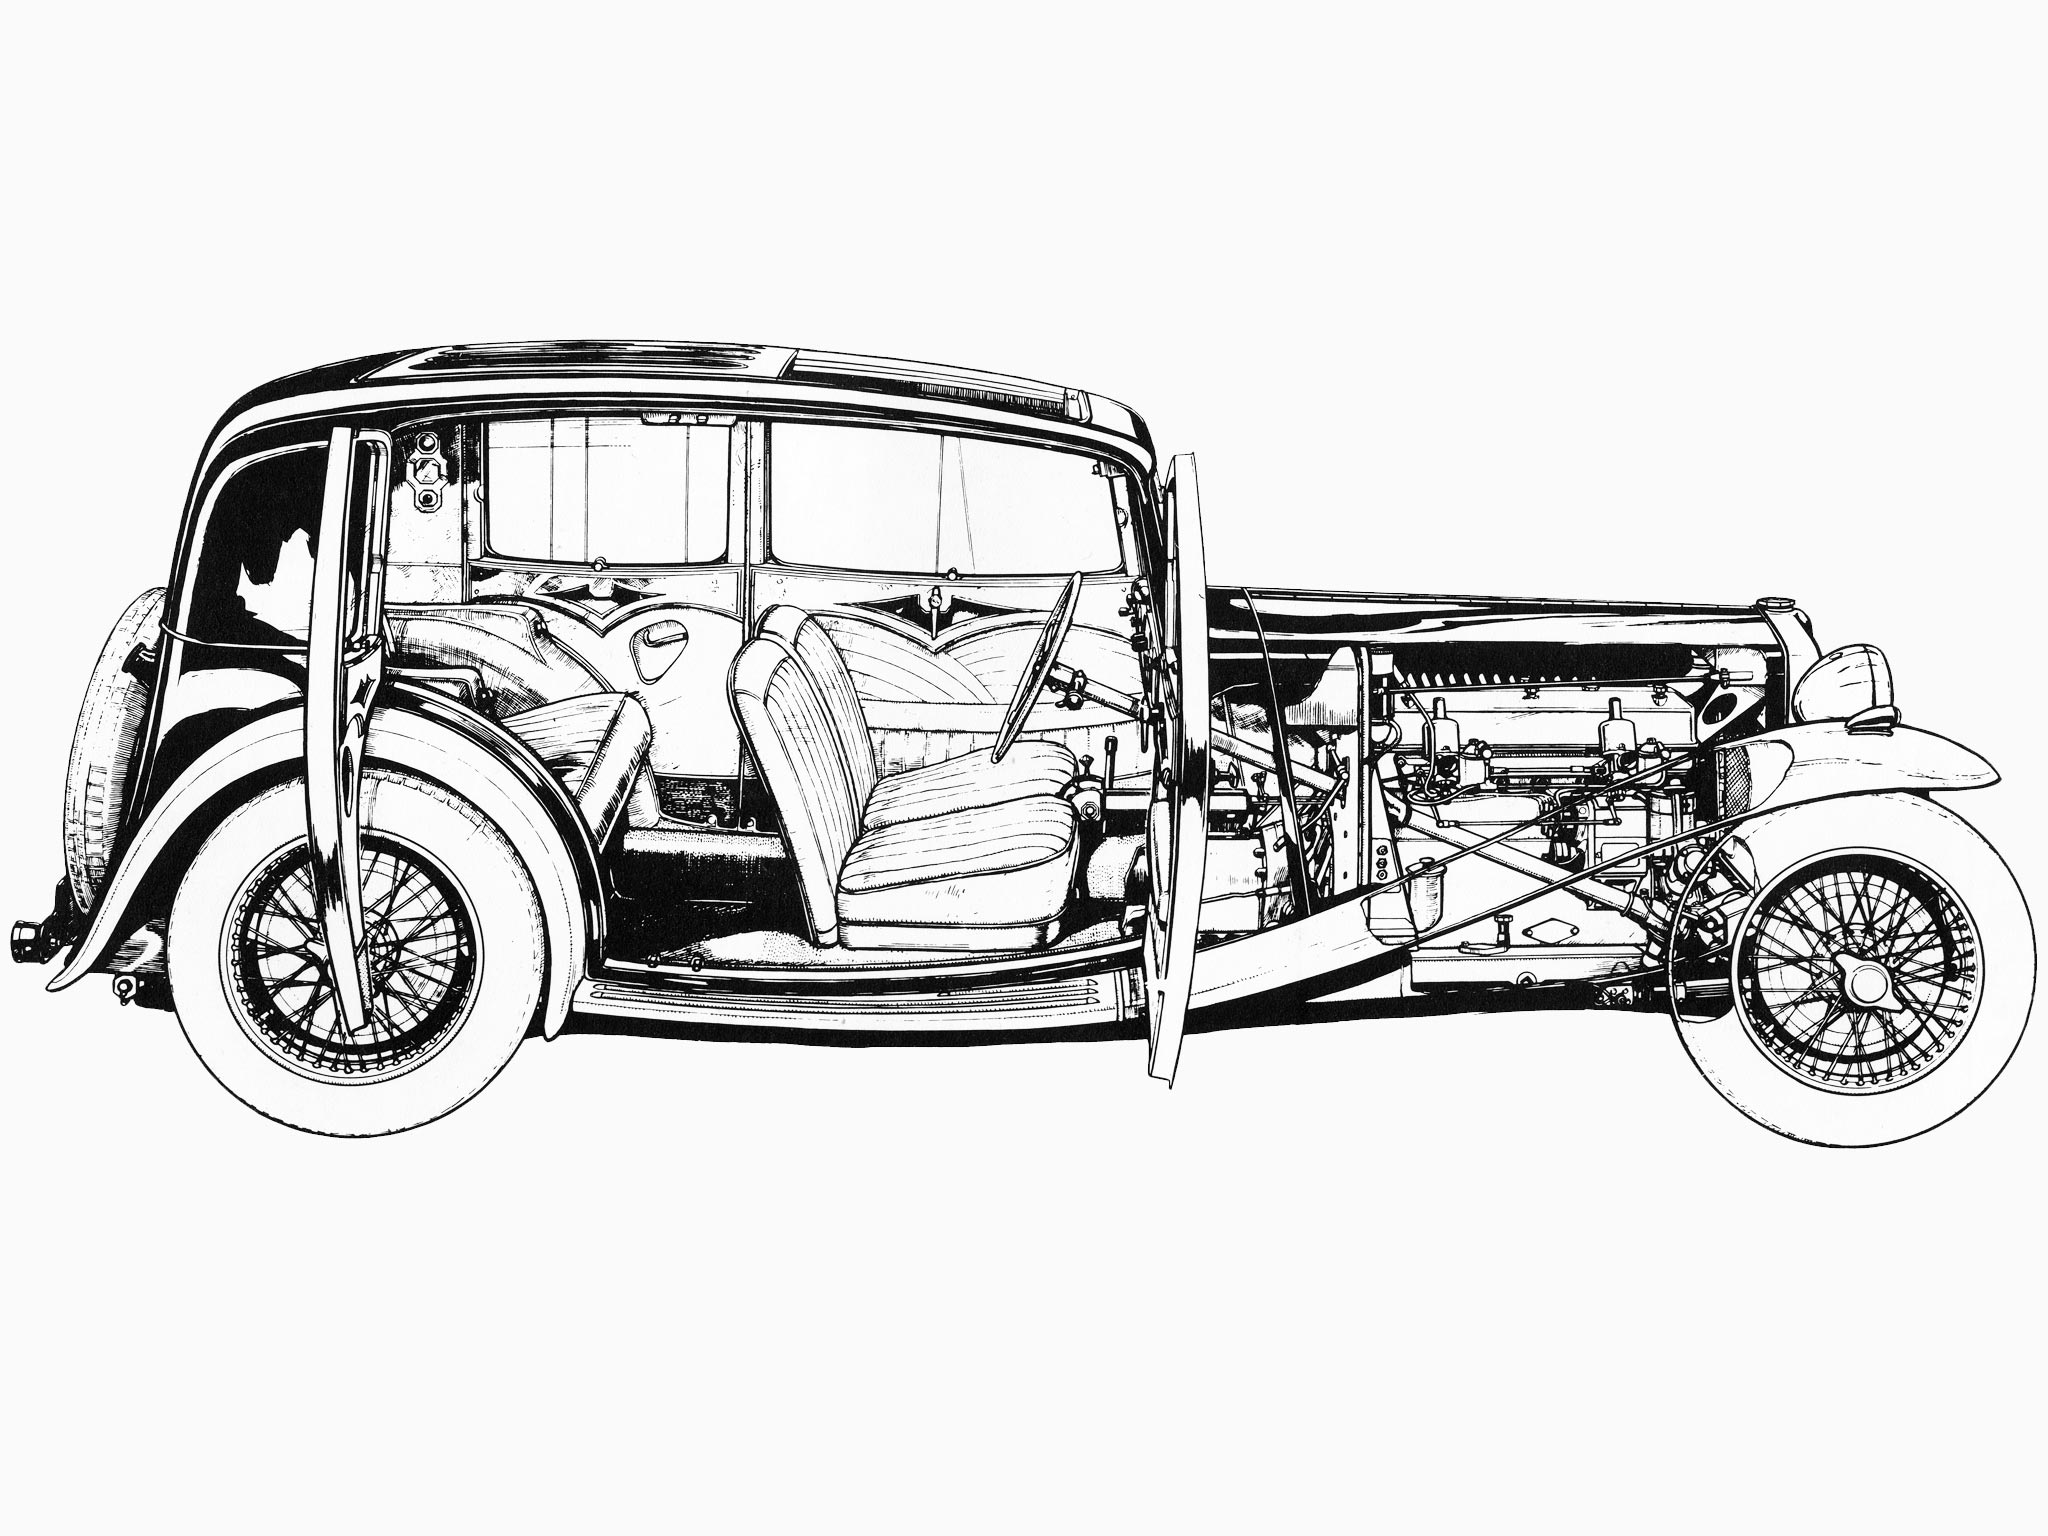 MG K1 Magnette cutaway drawing